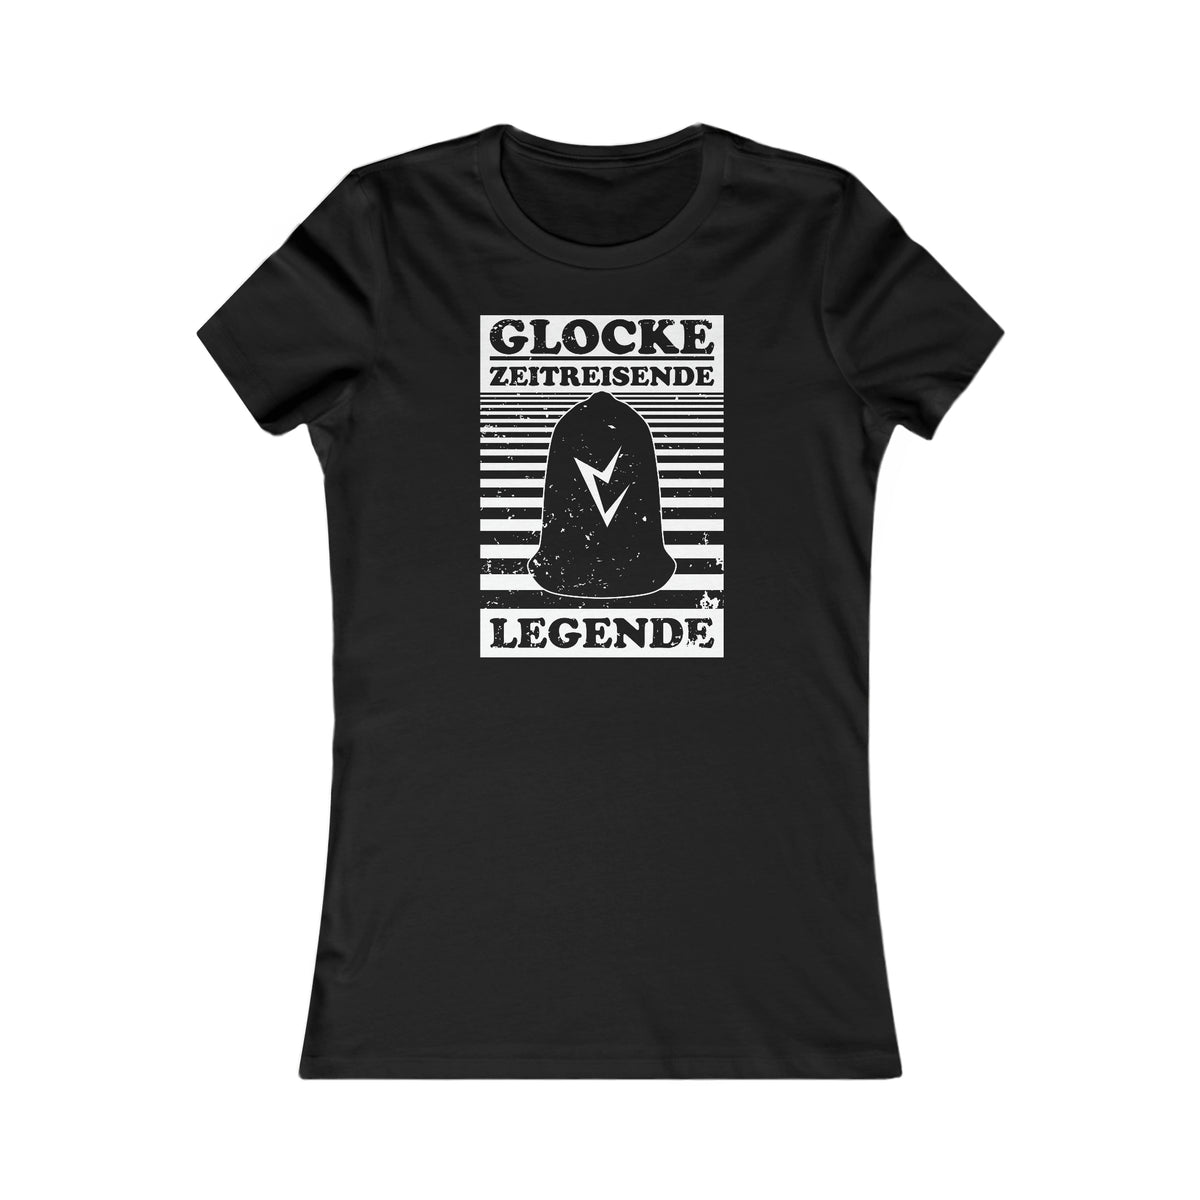 Die Glocke - Damen T Shirt